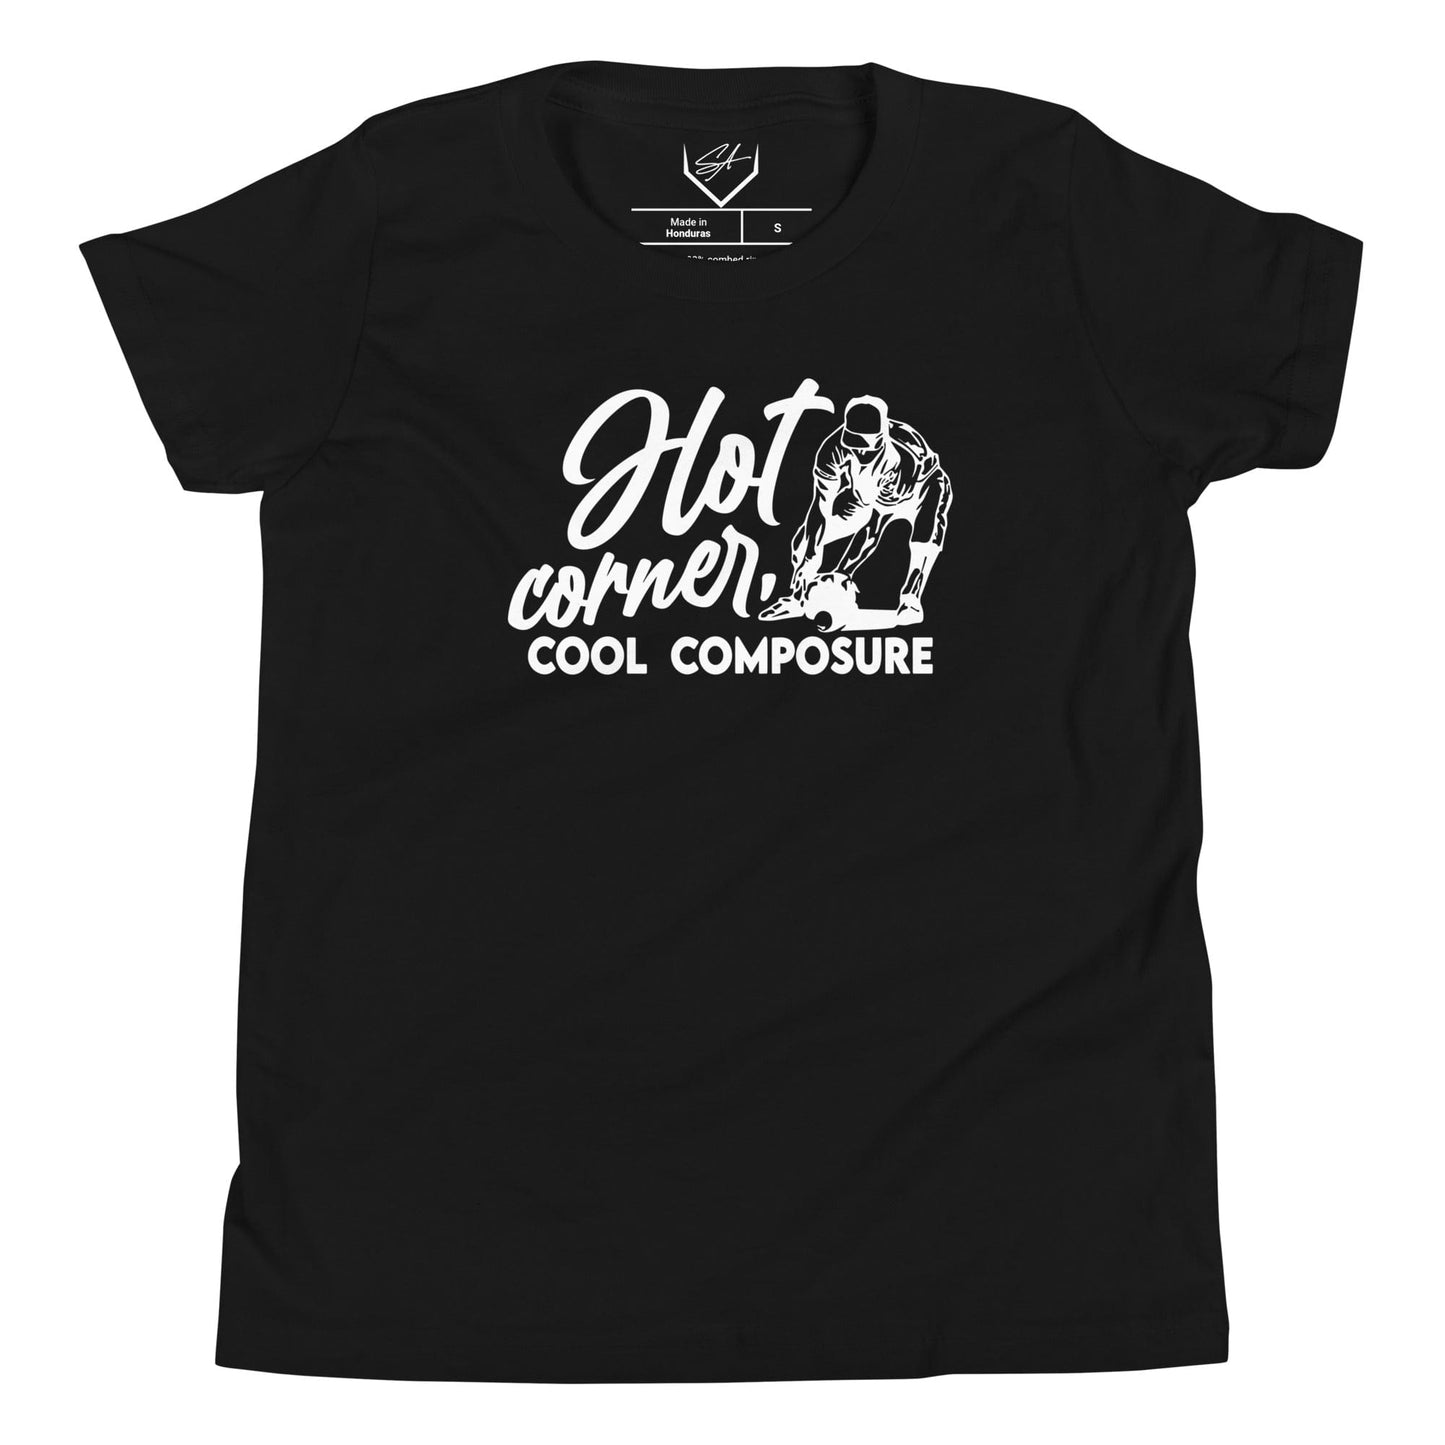 Hot Corner Cool Composure - Youth Tee